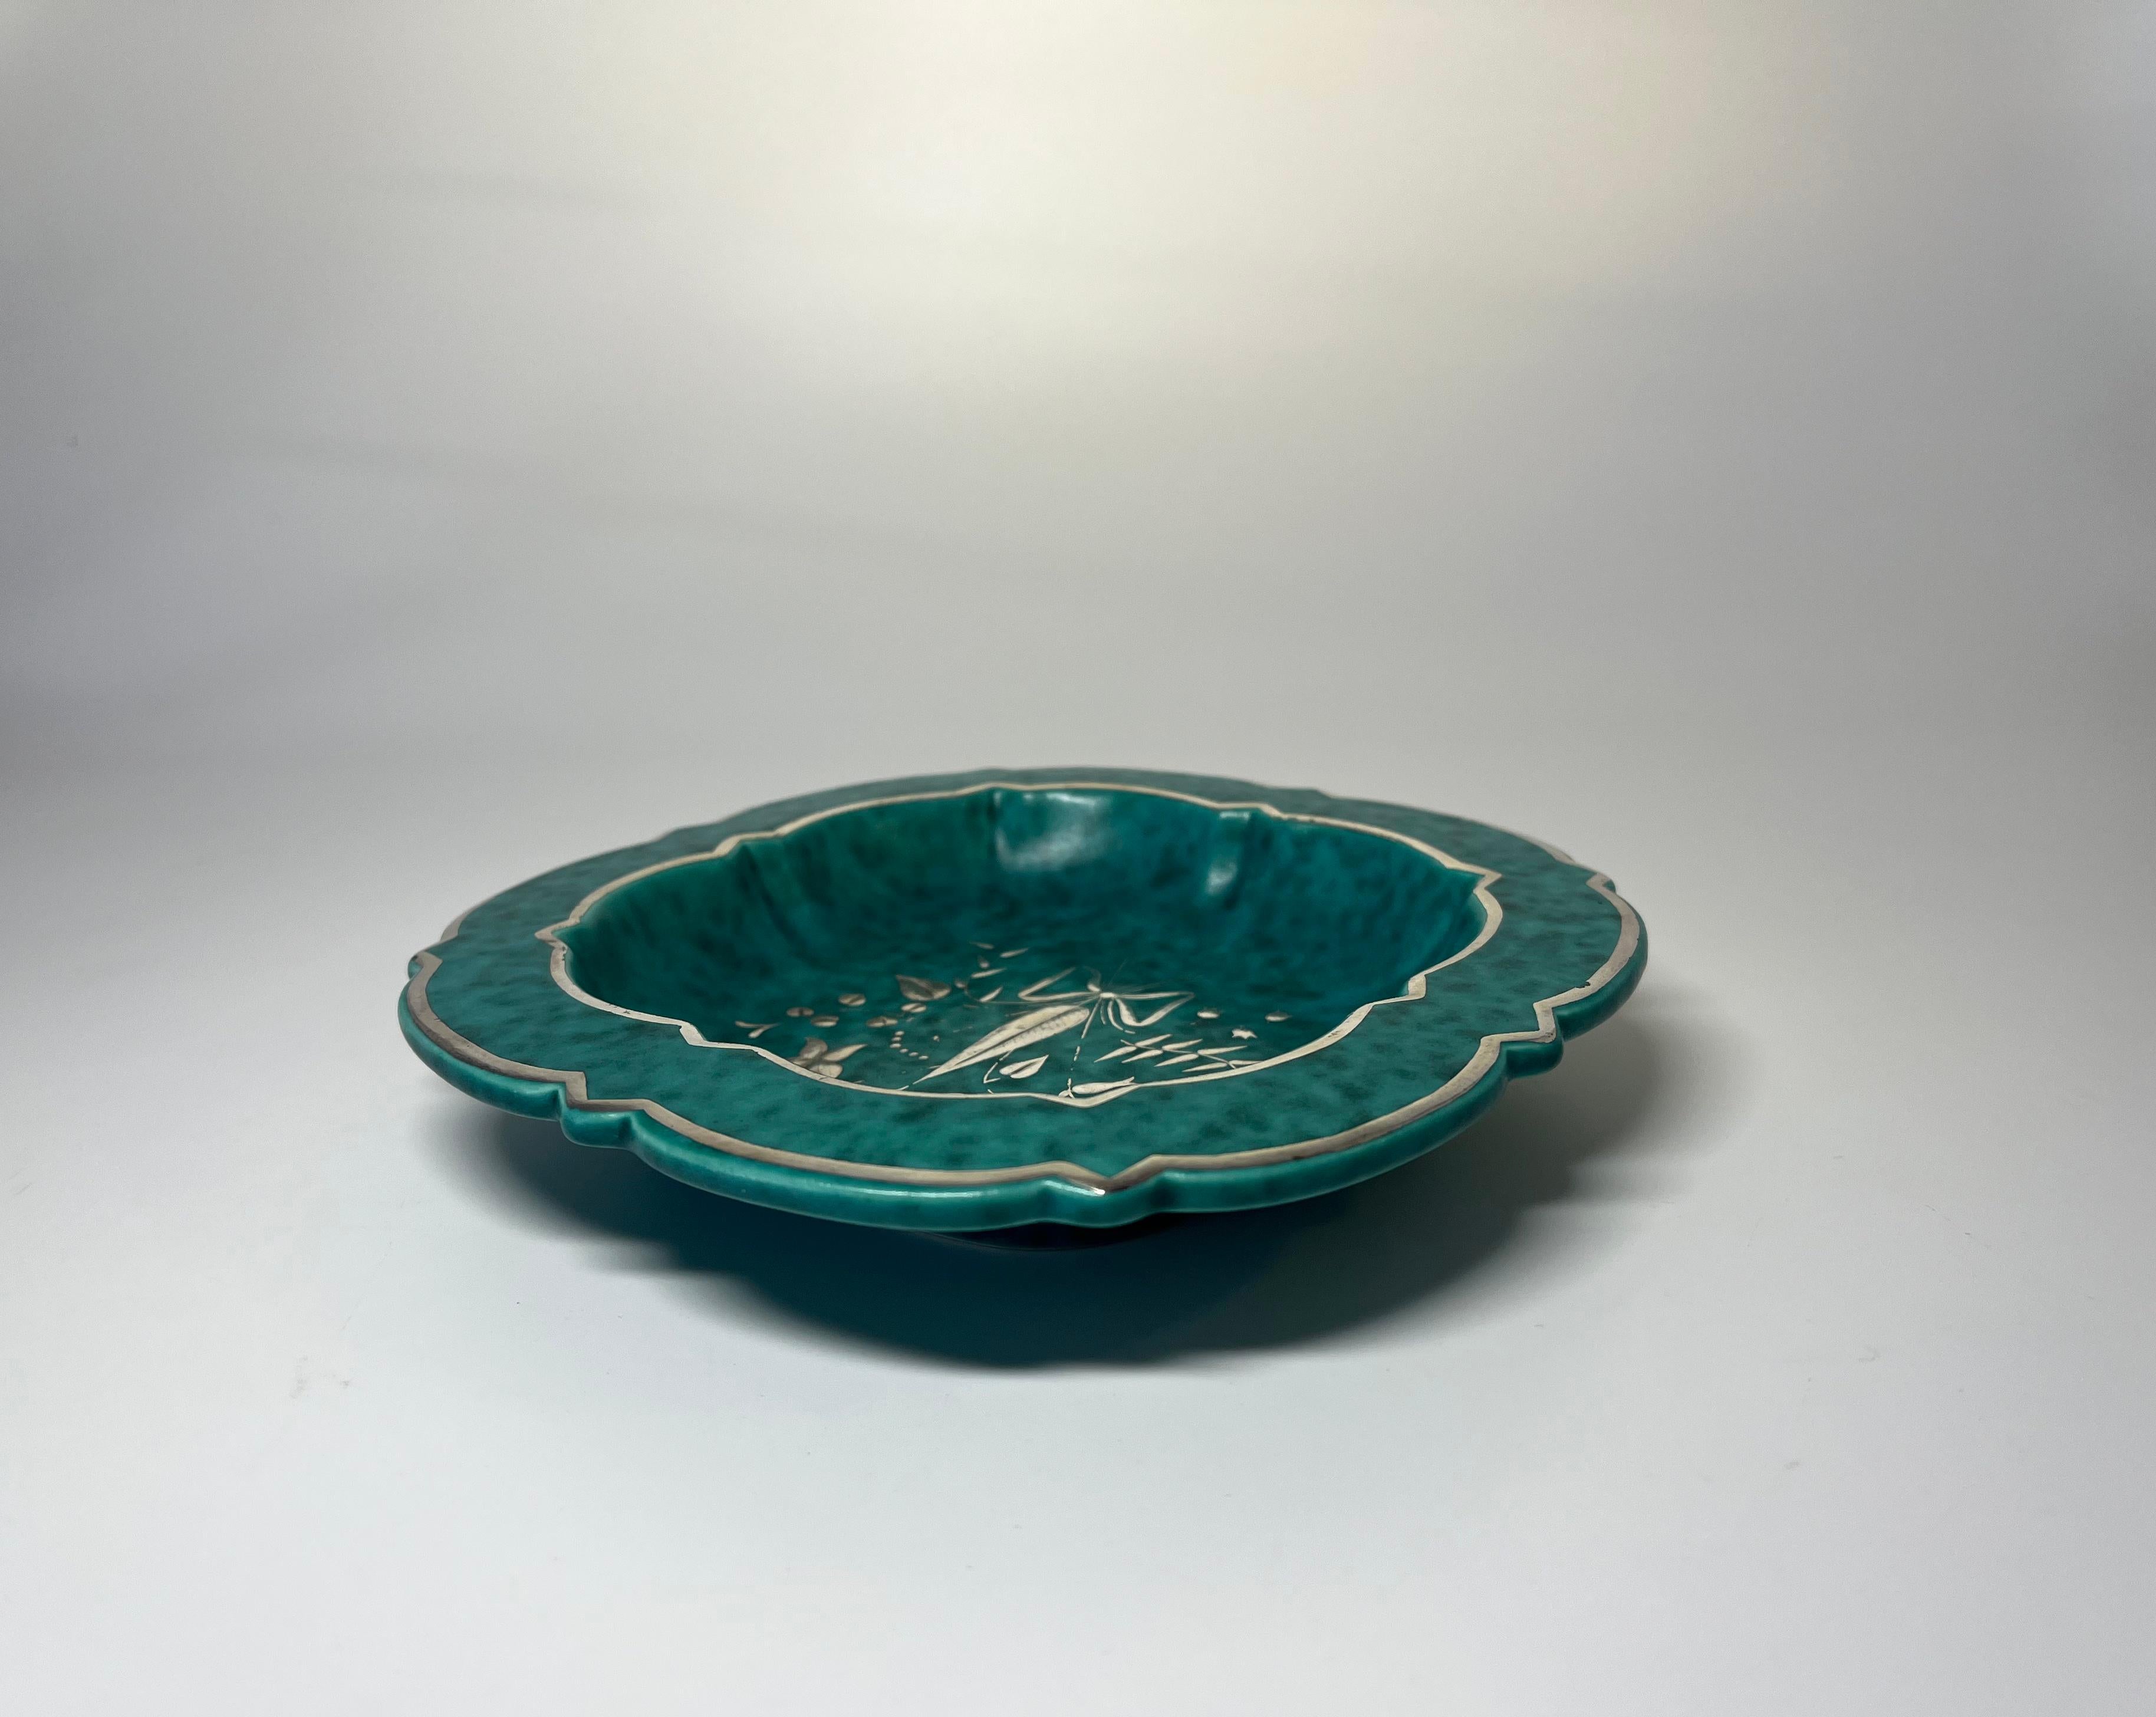 Glazed Wilhelm Kage, Argenta Series For Gustavsberg, Stoneware Silver Flora Dish c1940